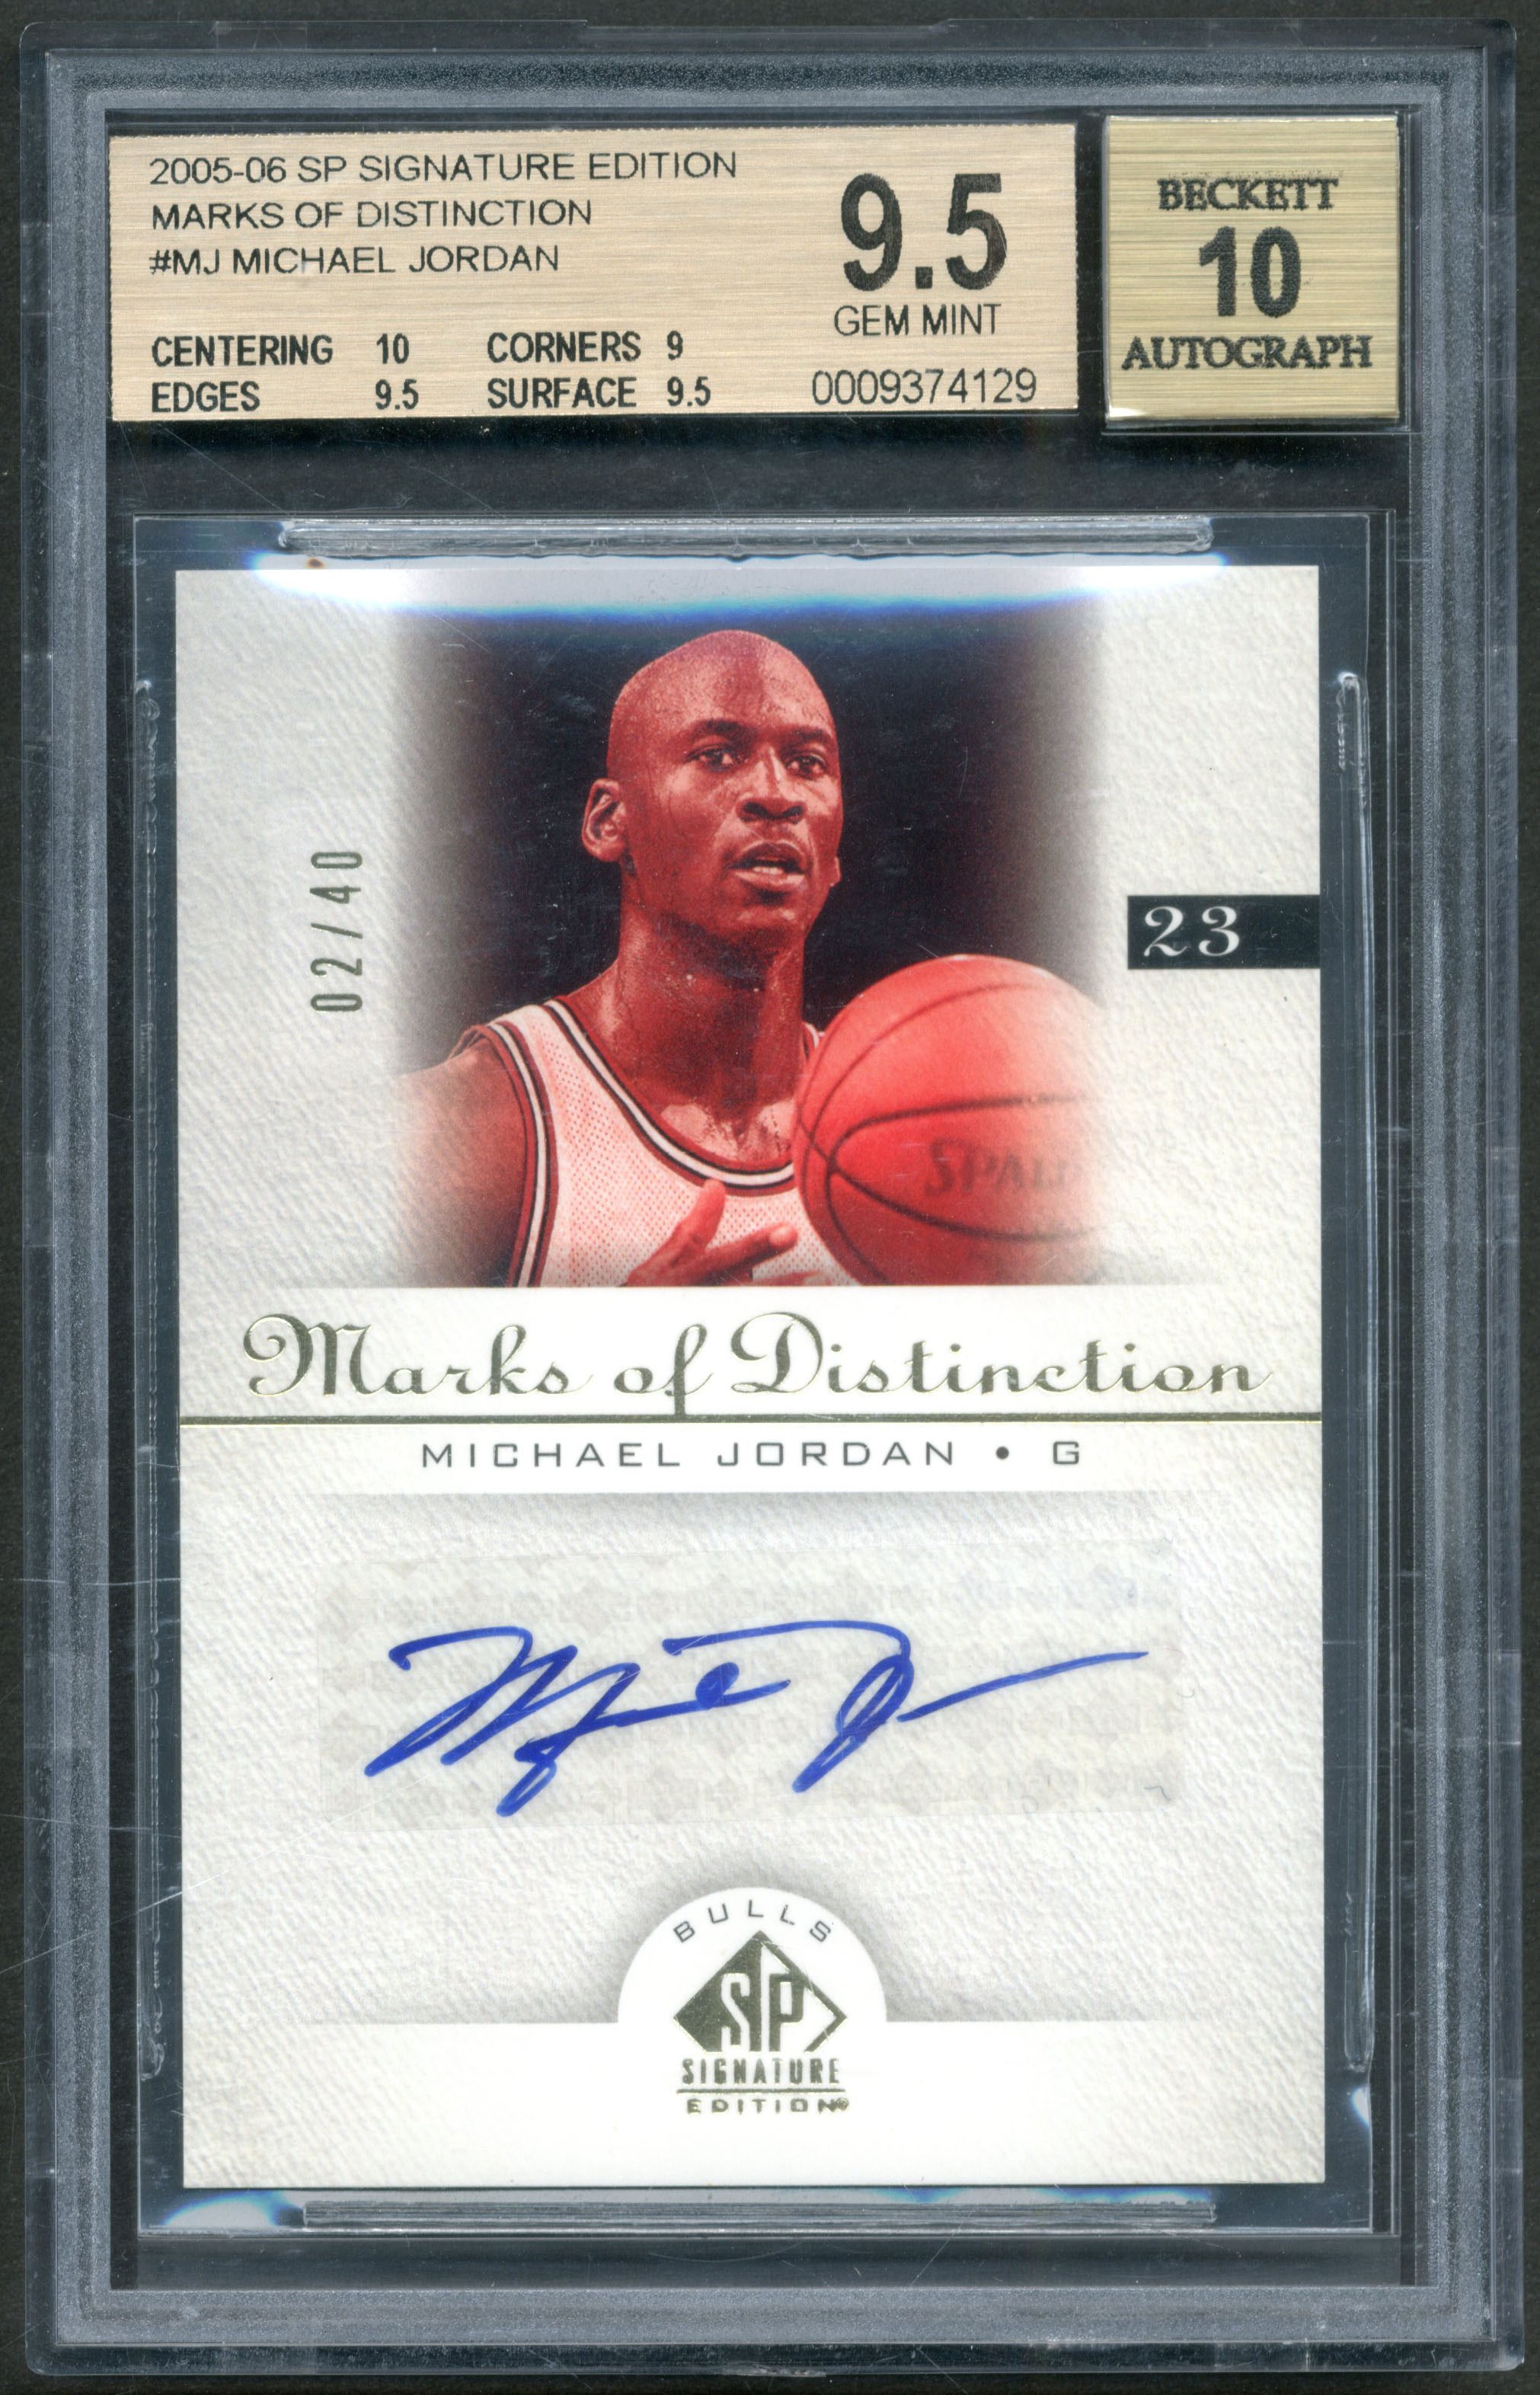 Basketball Cards - 2005-06 SP Signature Edition Marks of Distinction Michael Jordan Autograph 2/40 BGS GEM MINT 9.5 - Auto 10